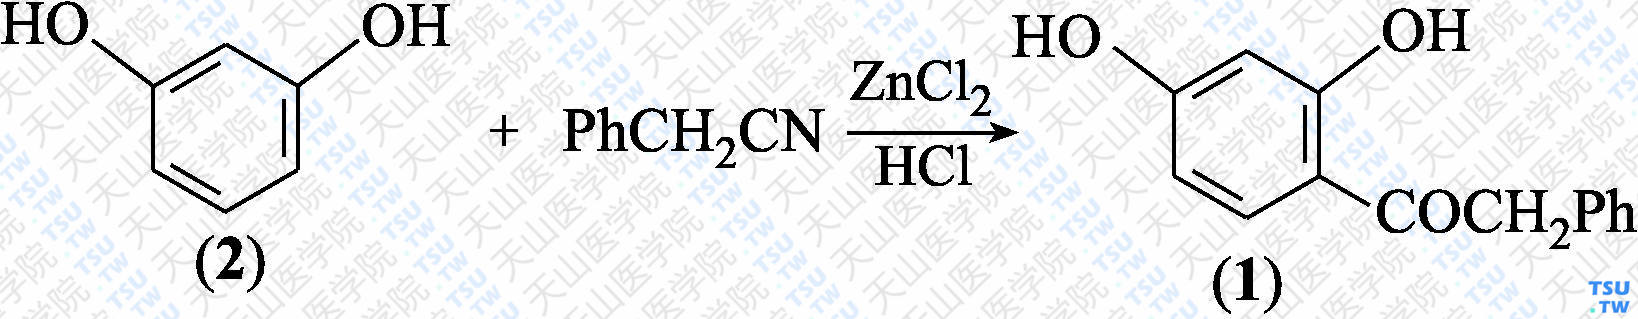 2，4-二羟苯基苄基甲酮（分子式：C<sub>14</sub>H<sub>12</sub>O<sub>3</sub>）的合成方法路线及其结构式